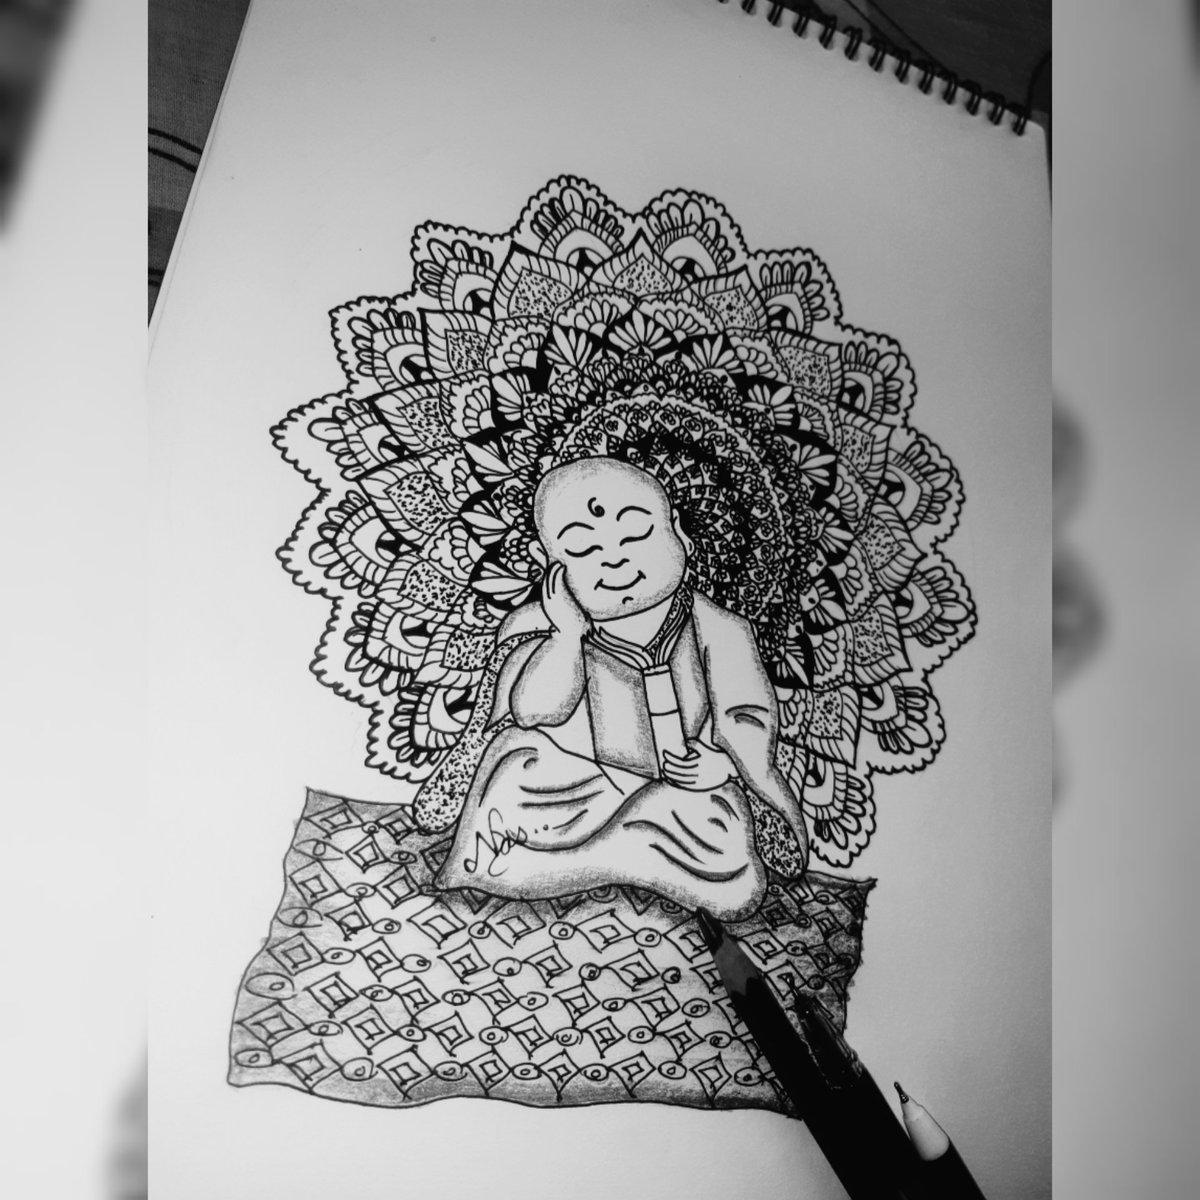 Peace is everywhere🤍
#o #mandalalovers #meditation  #sketch #inked  #yoga #blackwork #mandalasharing #creative #digitalart #illustration #beautiful #mandalaartwork #blackandwhite #dotworktattoo #homedecor #drawings #mandalatherapy #draw #tattooartist #india #addict